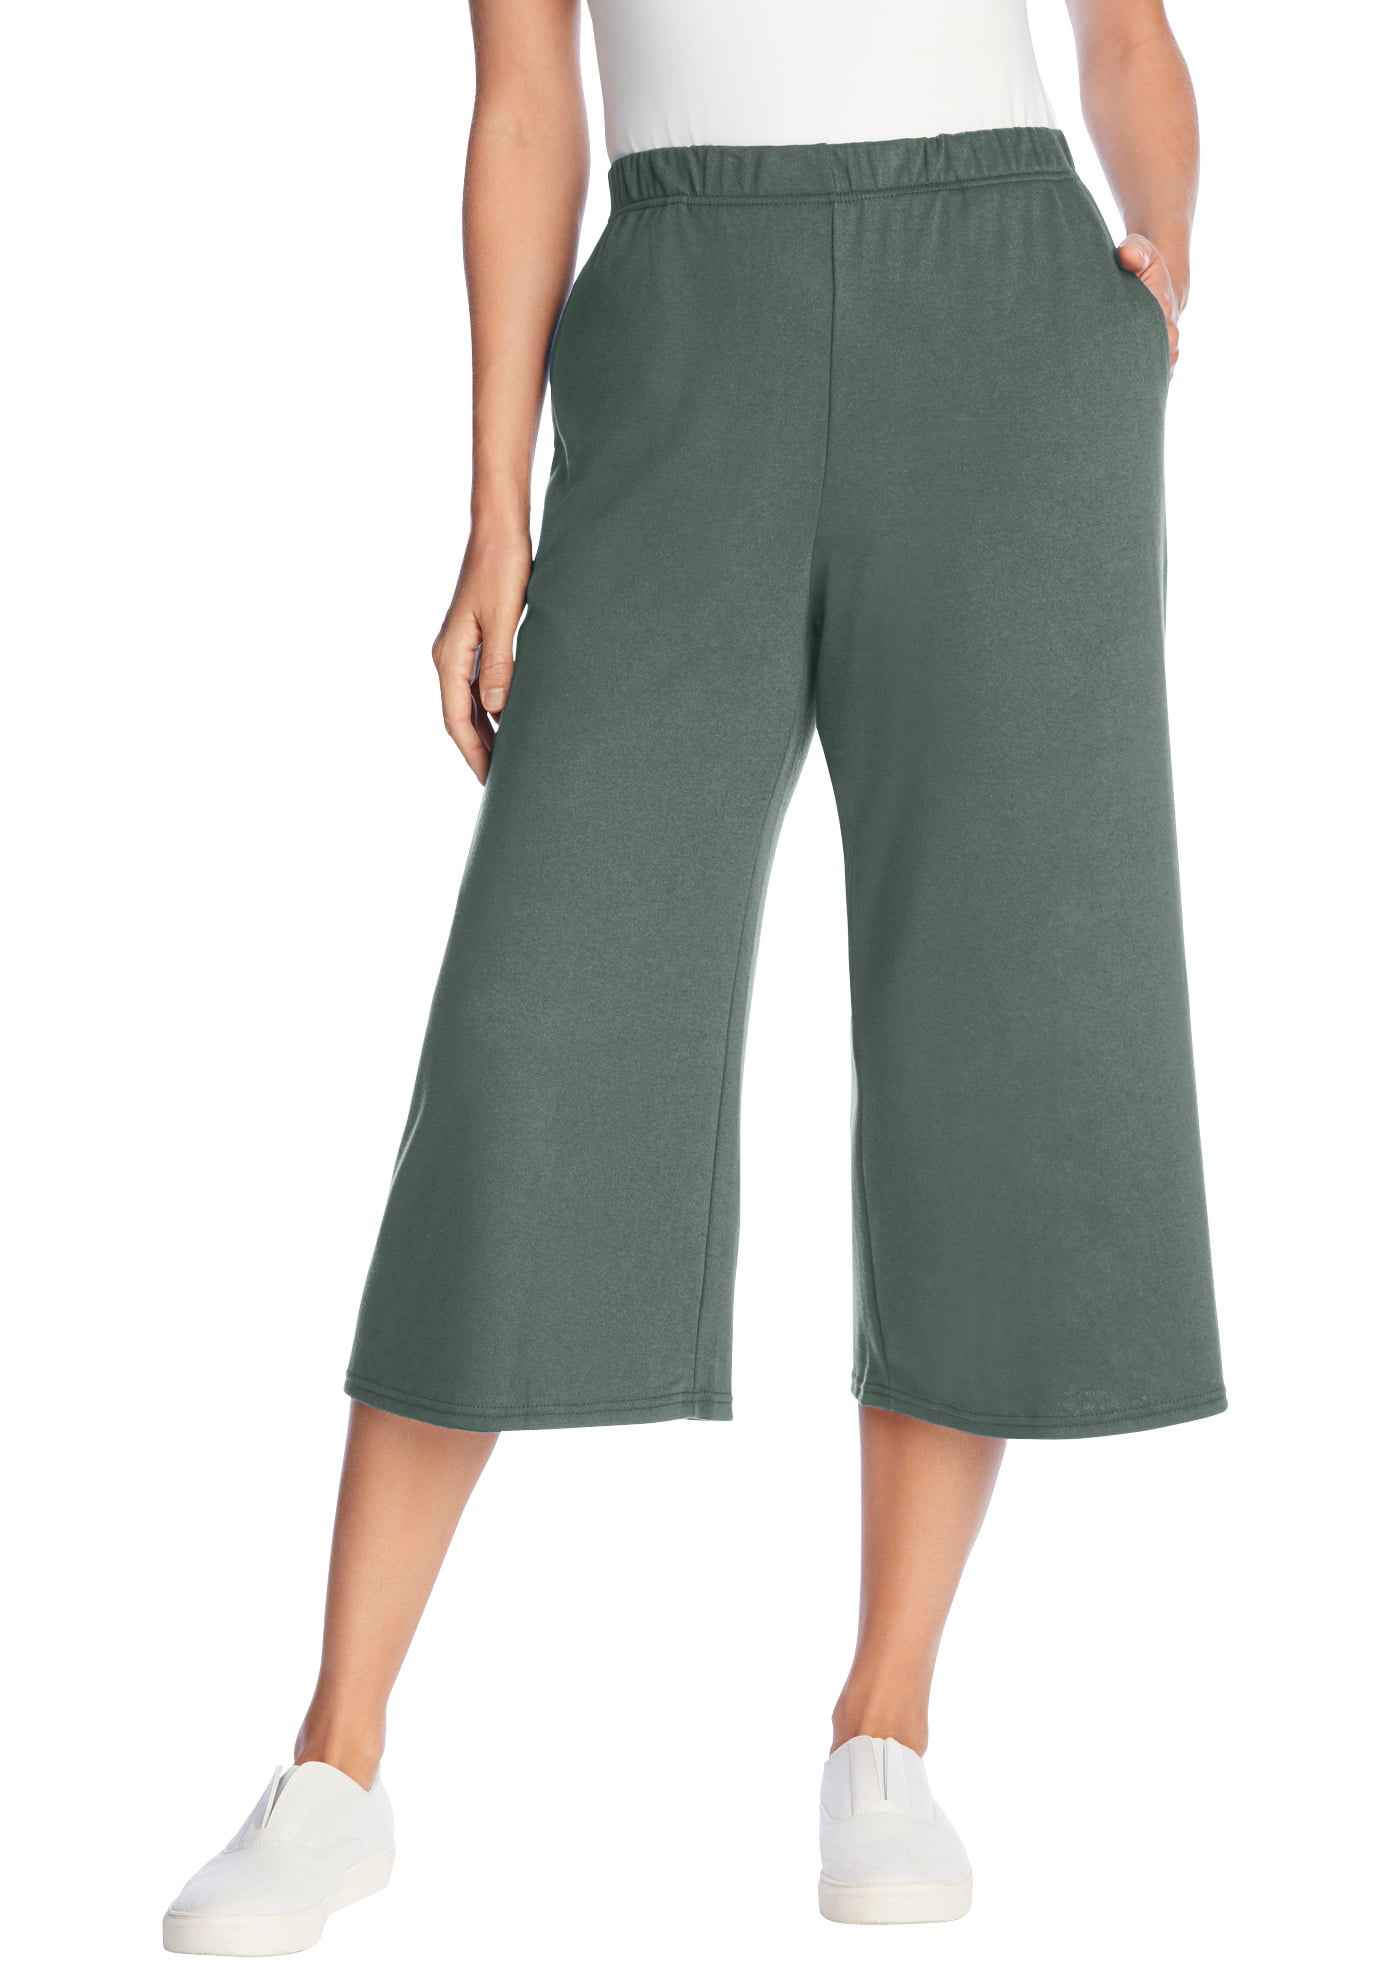 Woman Within Women's Plus Size 7-Day Knit Culotte Pants - Walmart.com